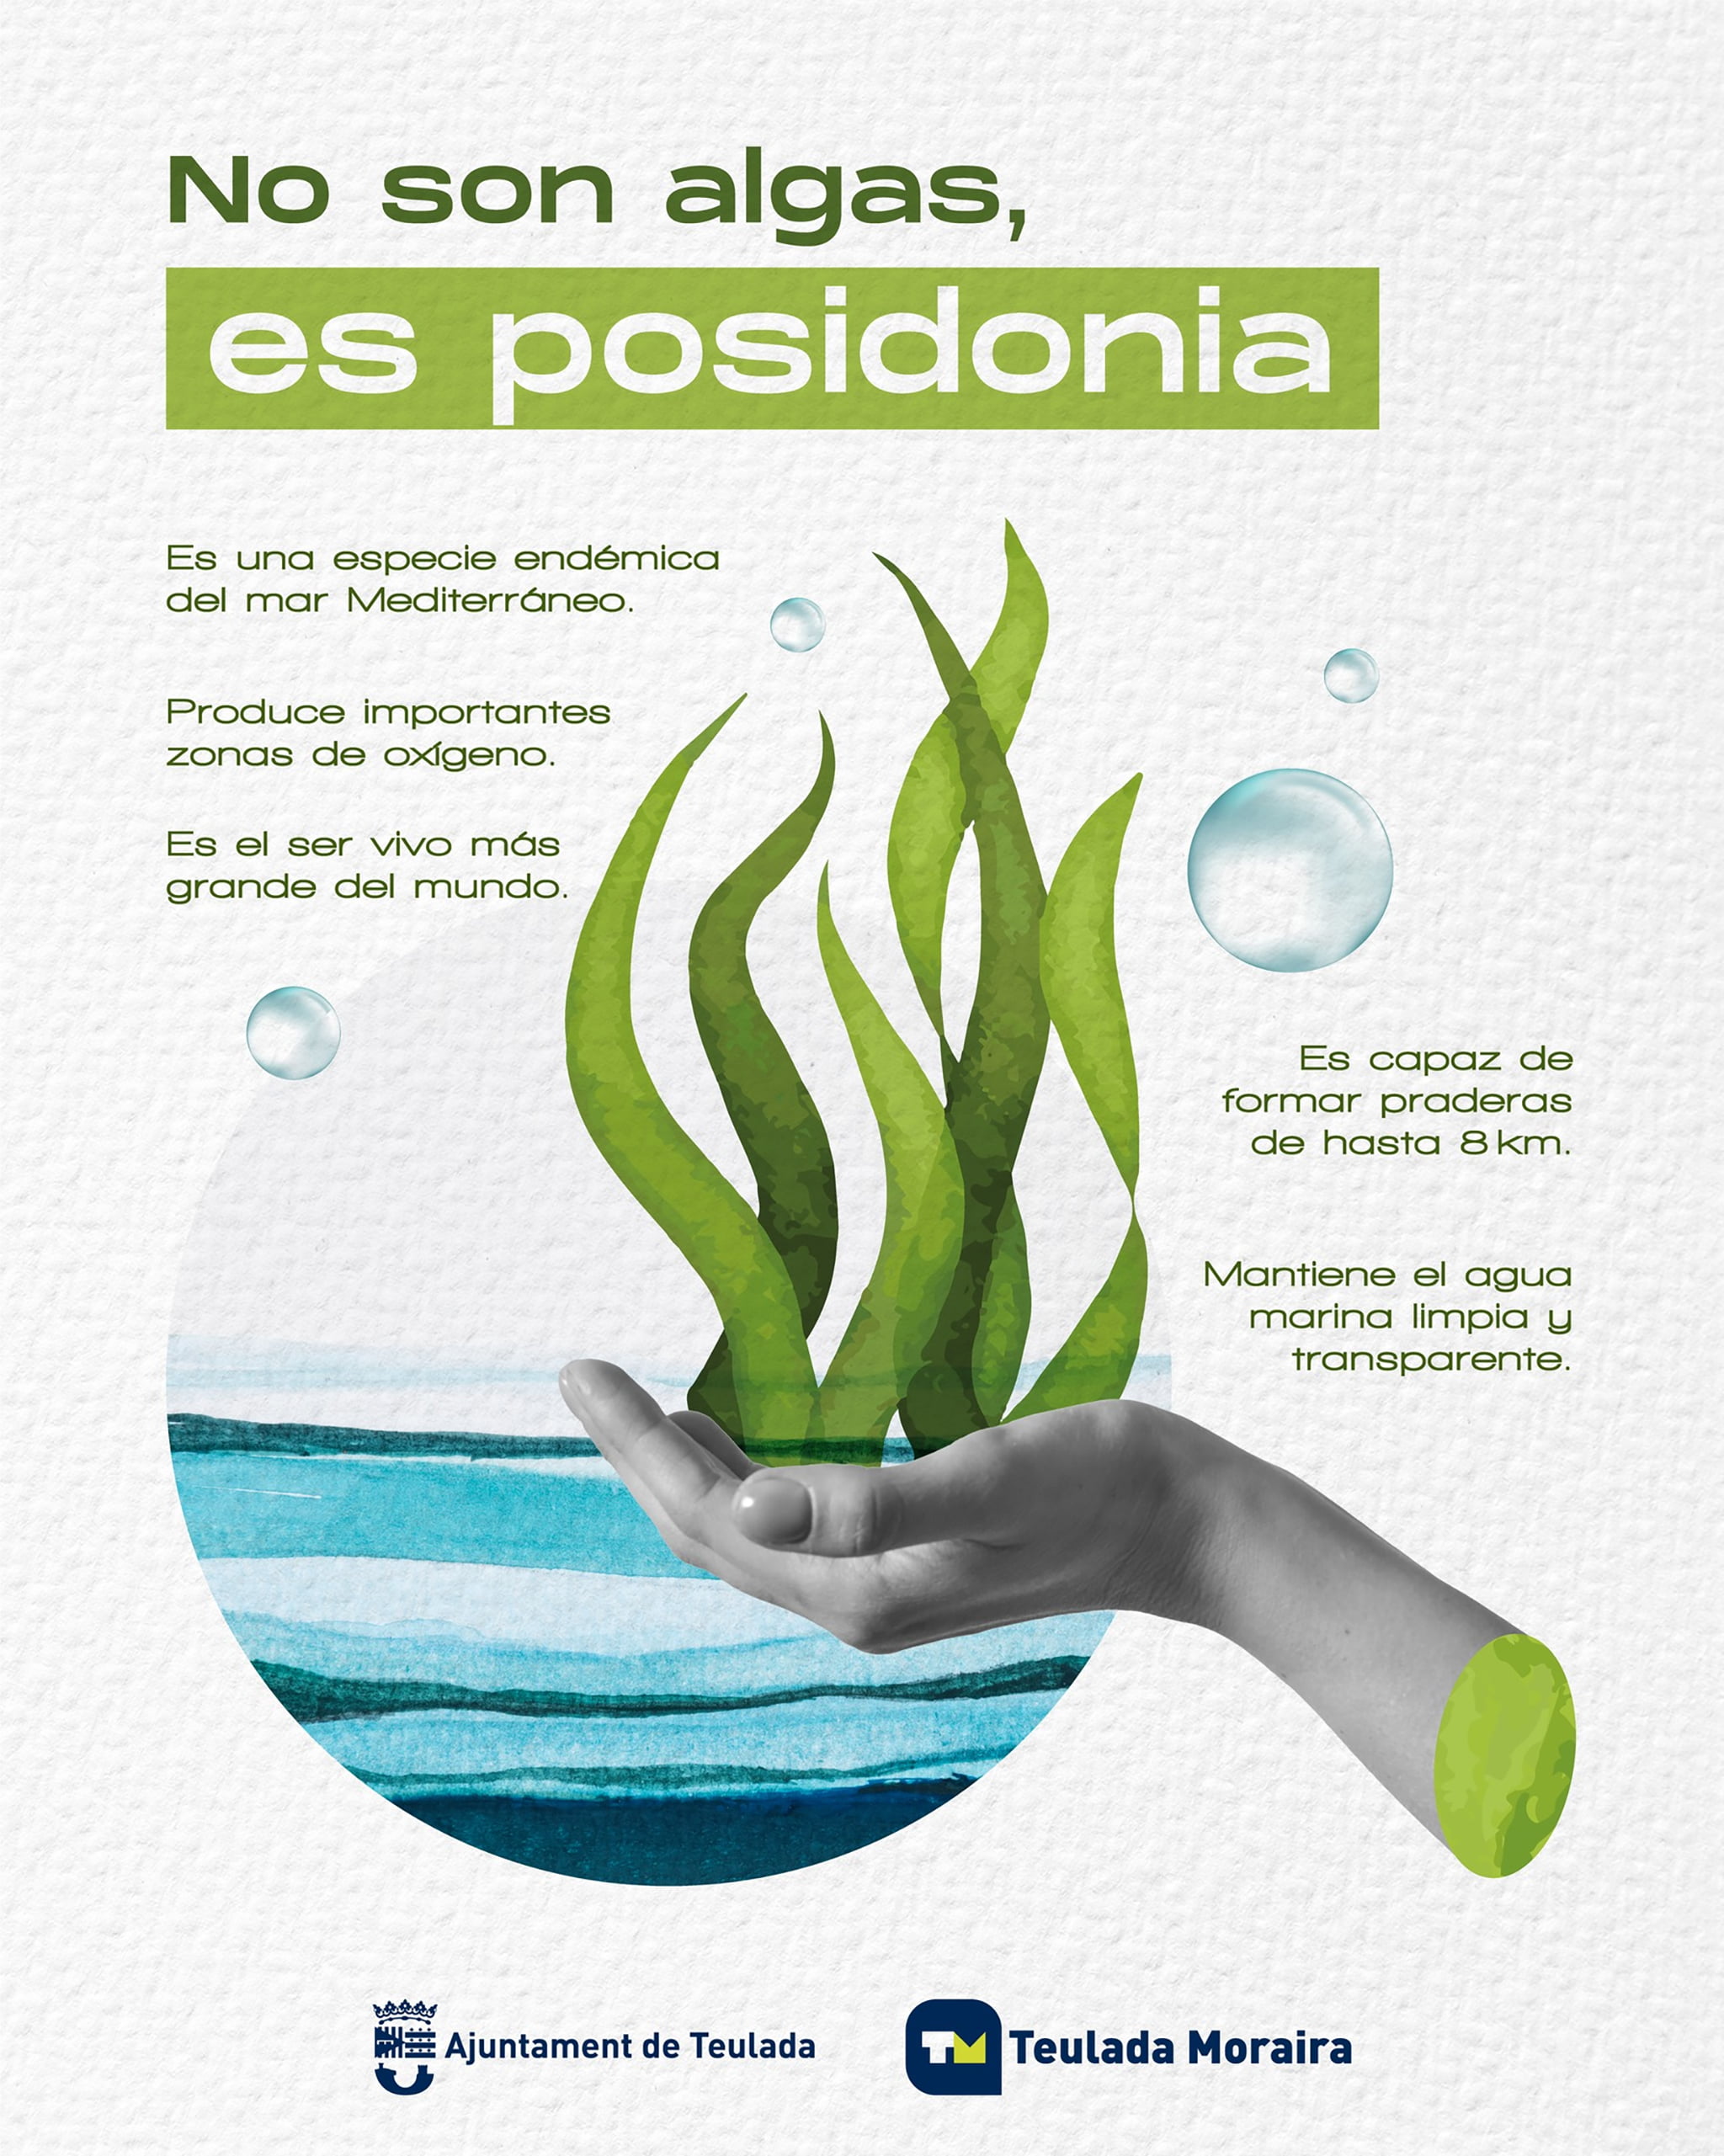 Campaña ‘No son algas, es posidonia’ de Teulada Moraira